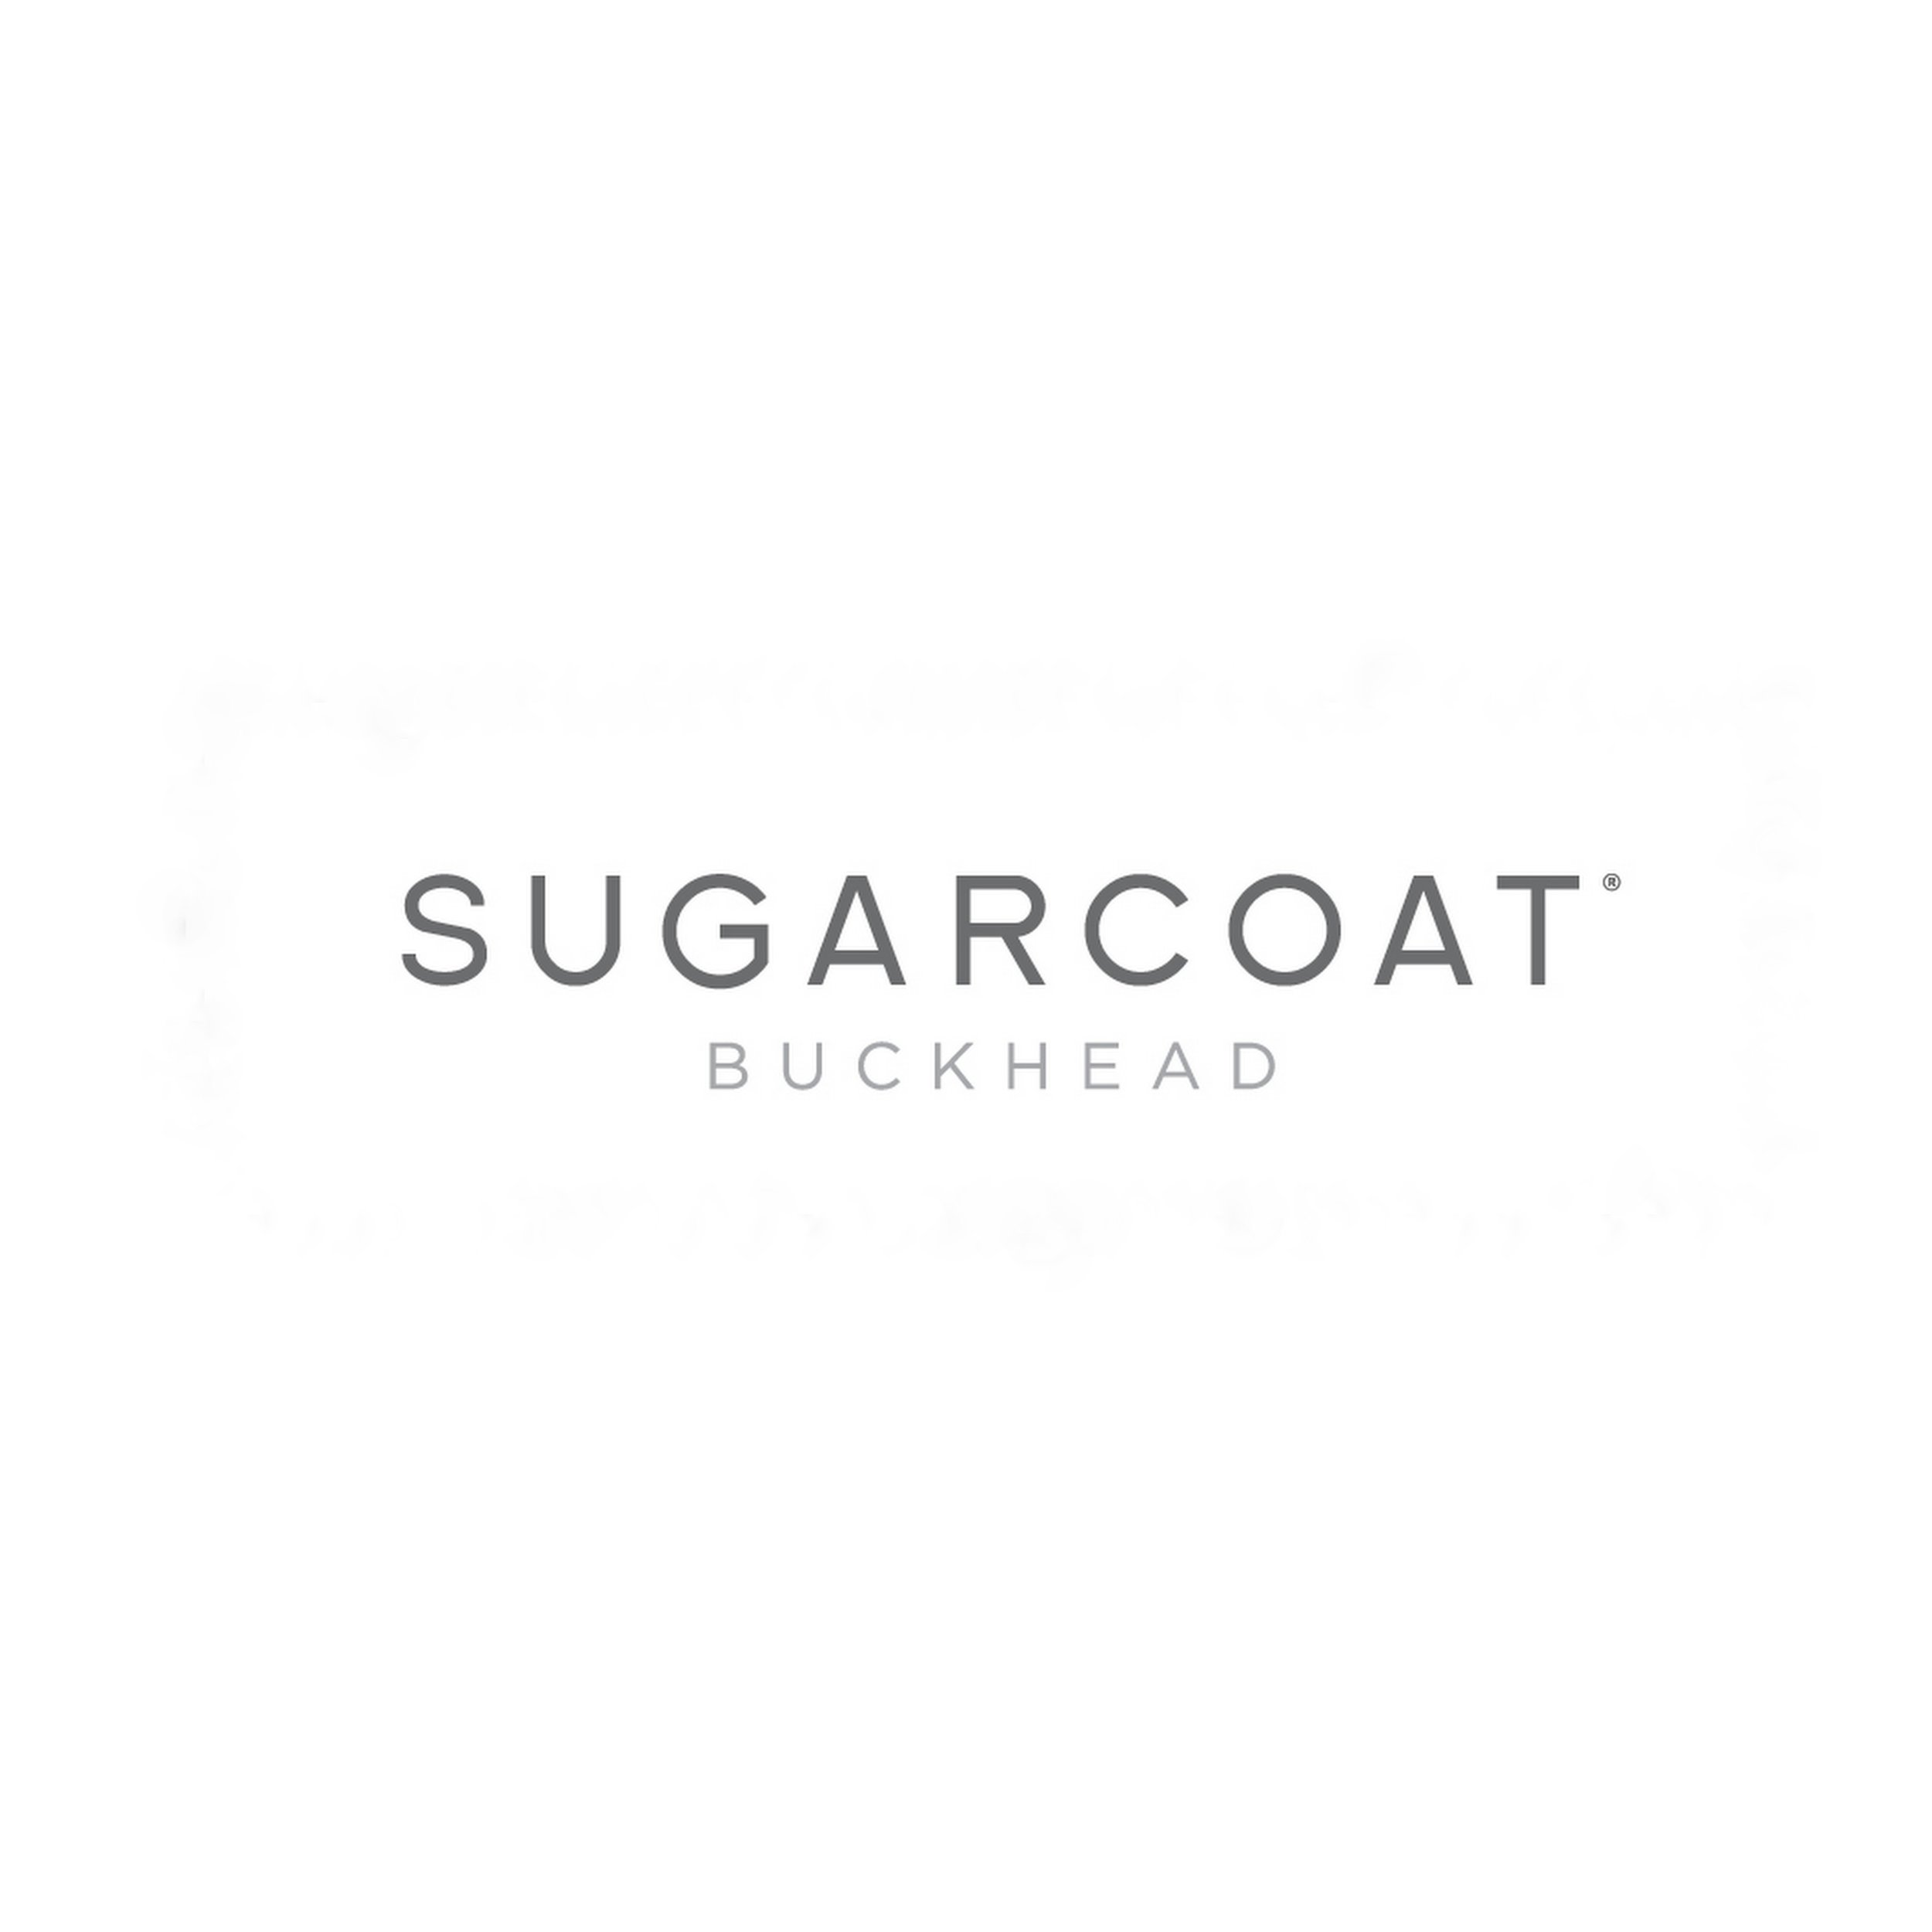 Sugarcoat Logo Buckhead.jpg